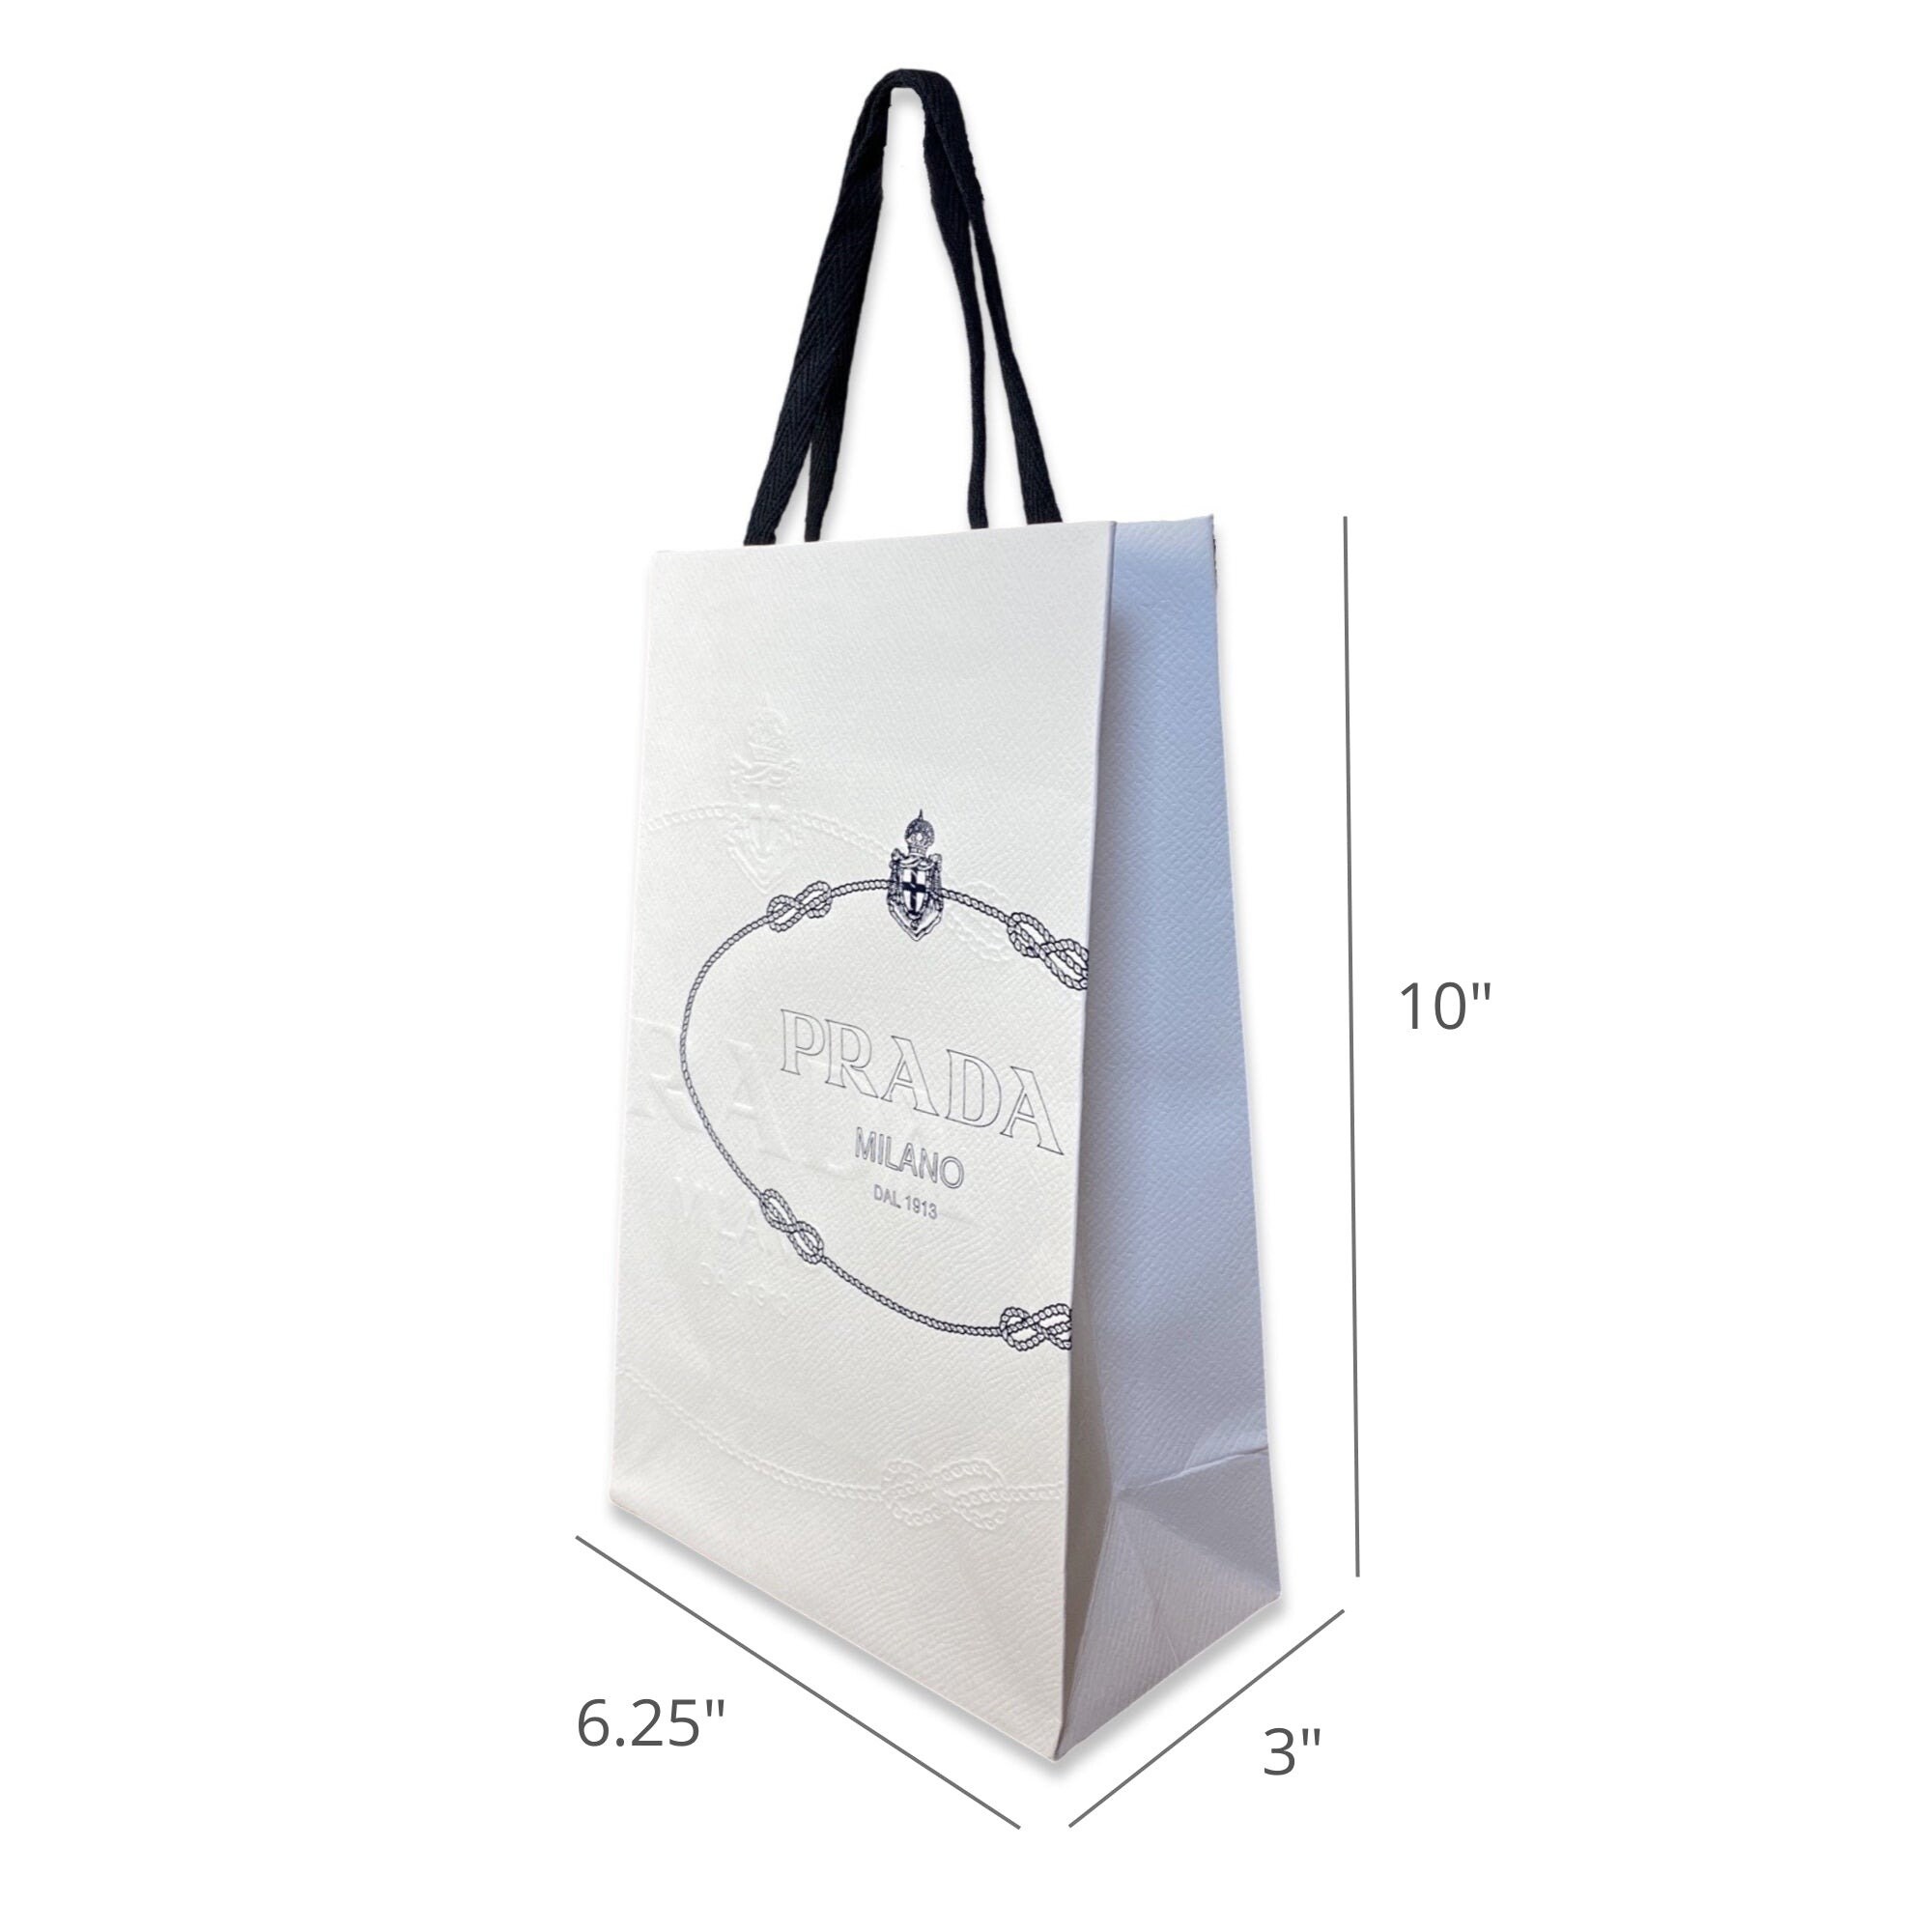 Prada Milano 1913 Logo Designer Shopping Gift Bag - Etsy